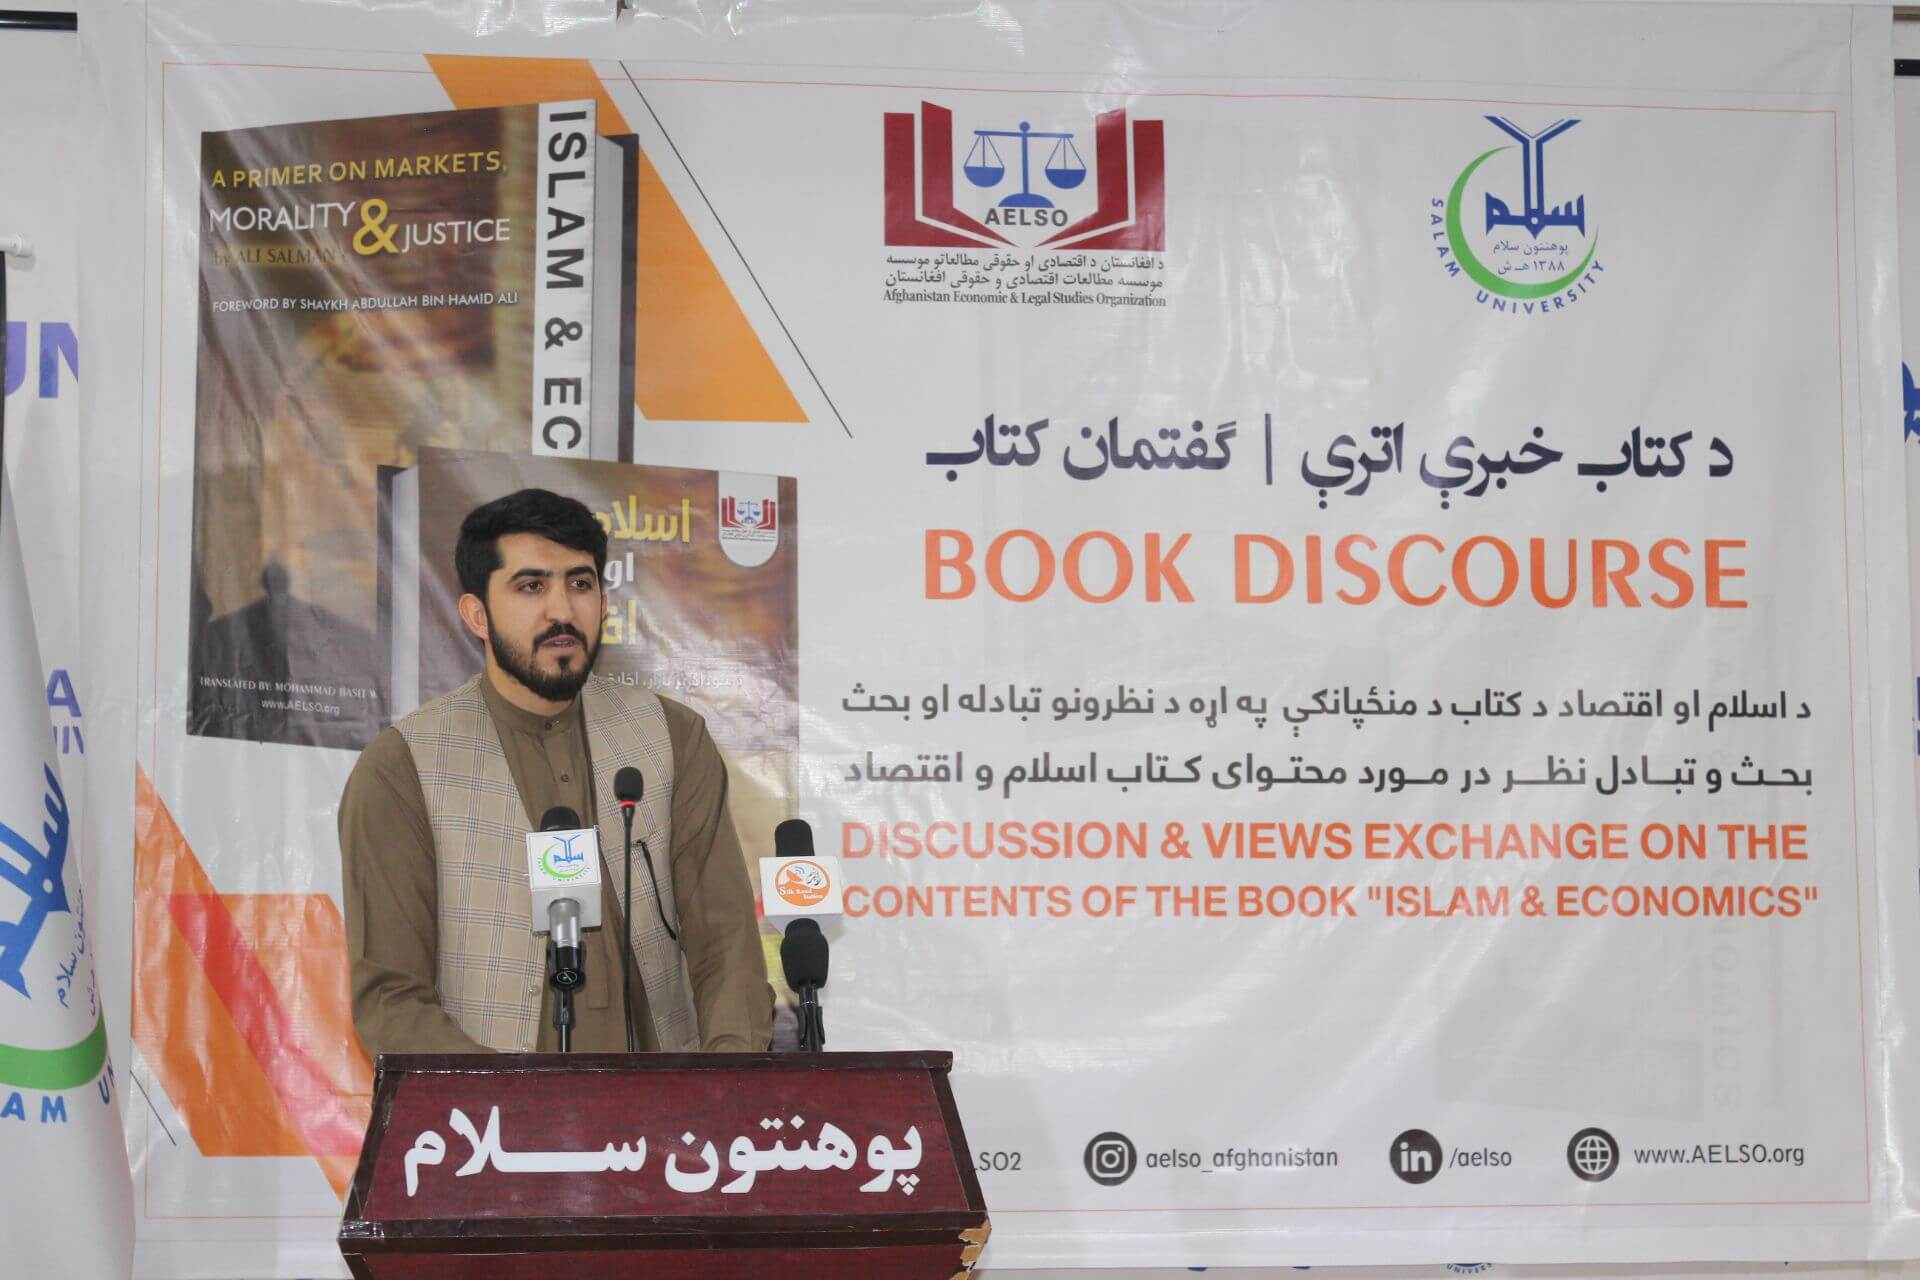 Mohammad Basit Wahidi, translator of the "Islam & Economics" book